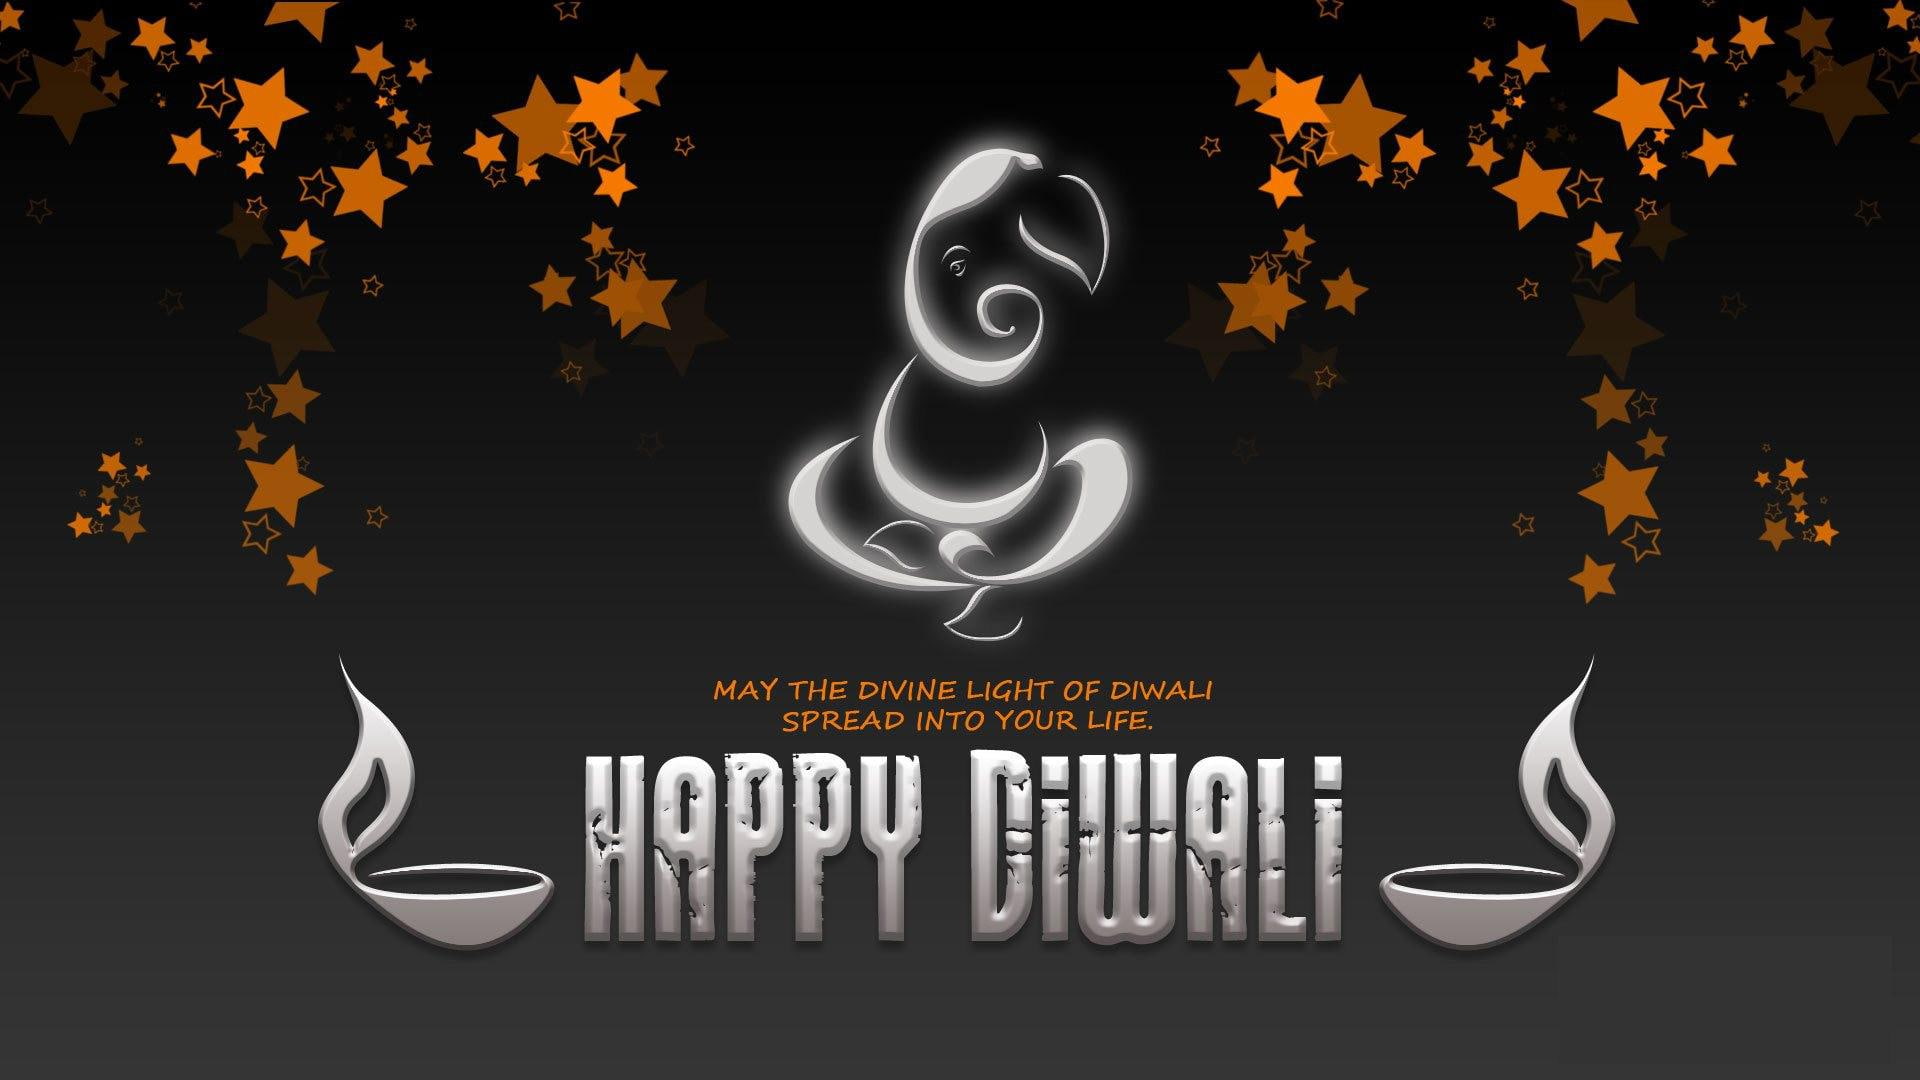 Happy Diwali Festival Picture of Ganesha with Black Desktop Background, happy diwali illustration